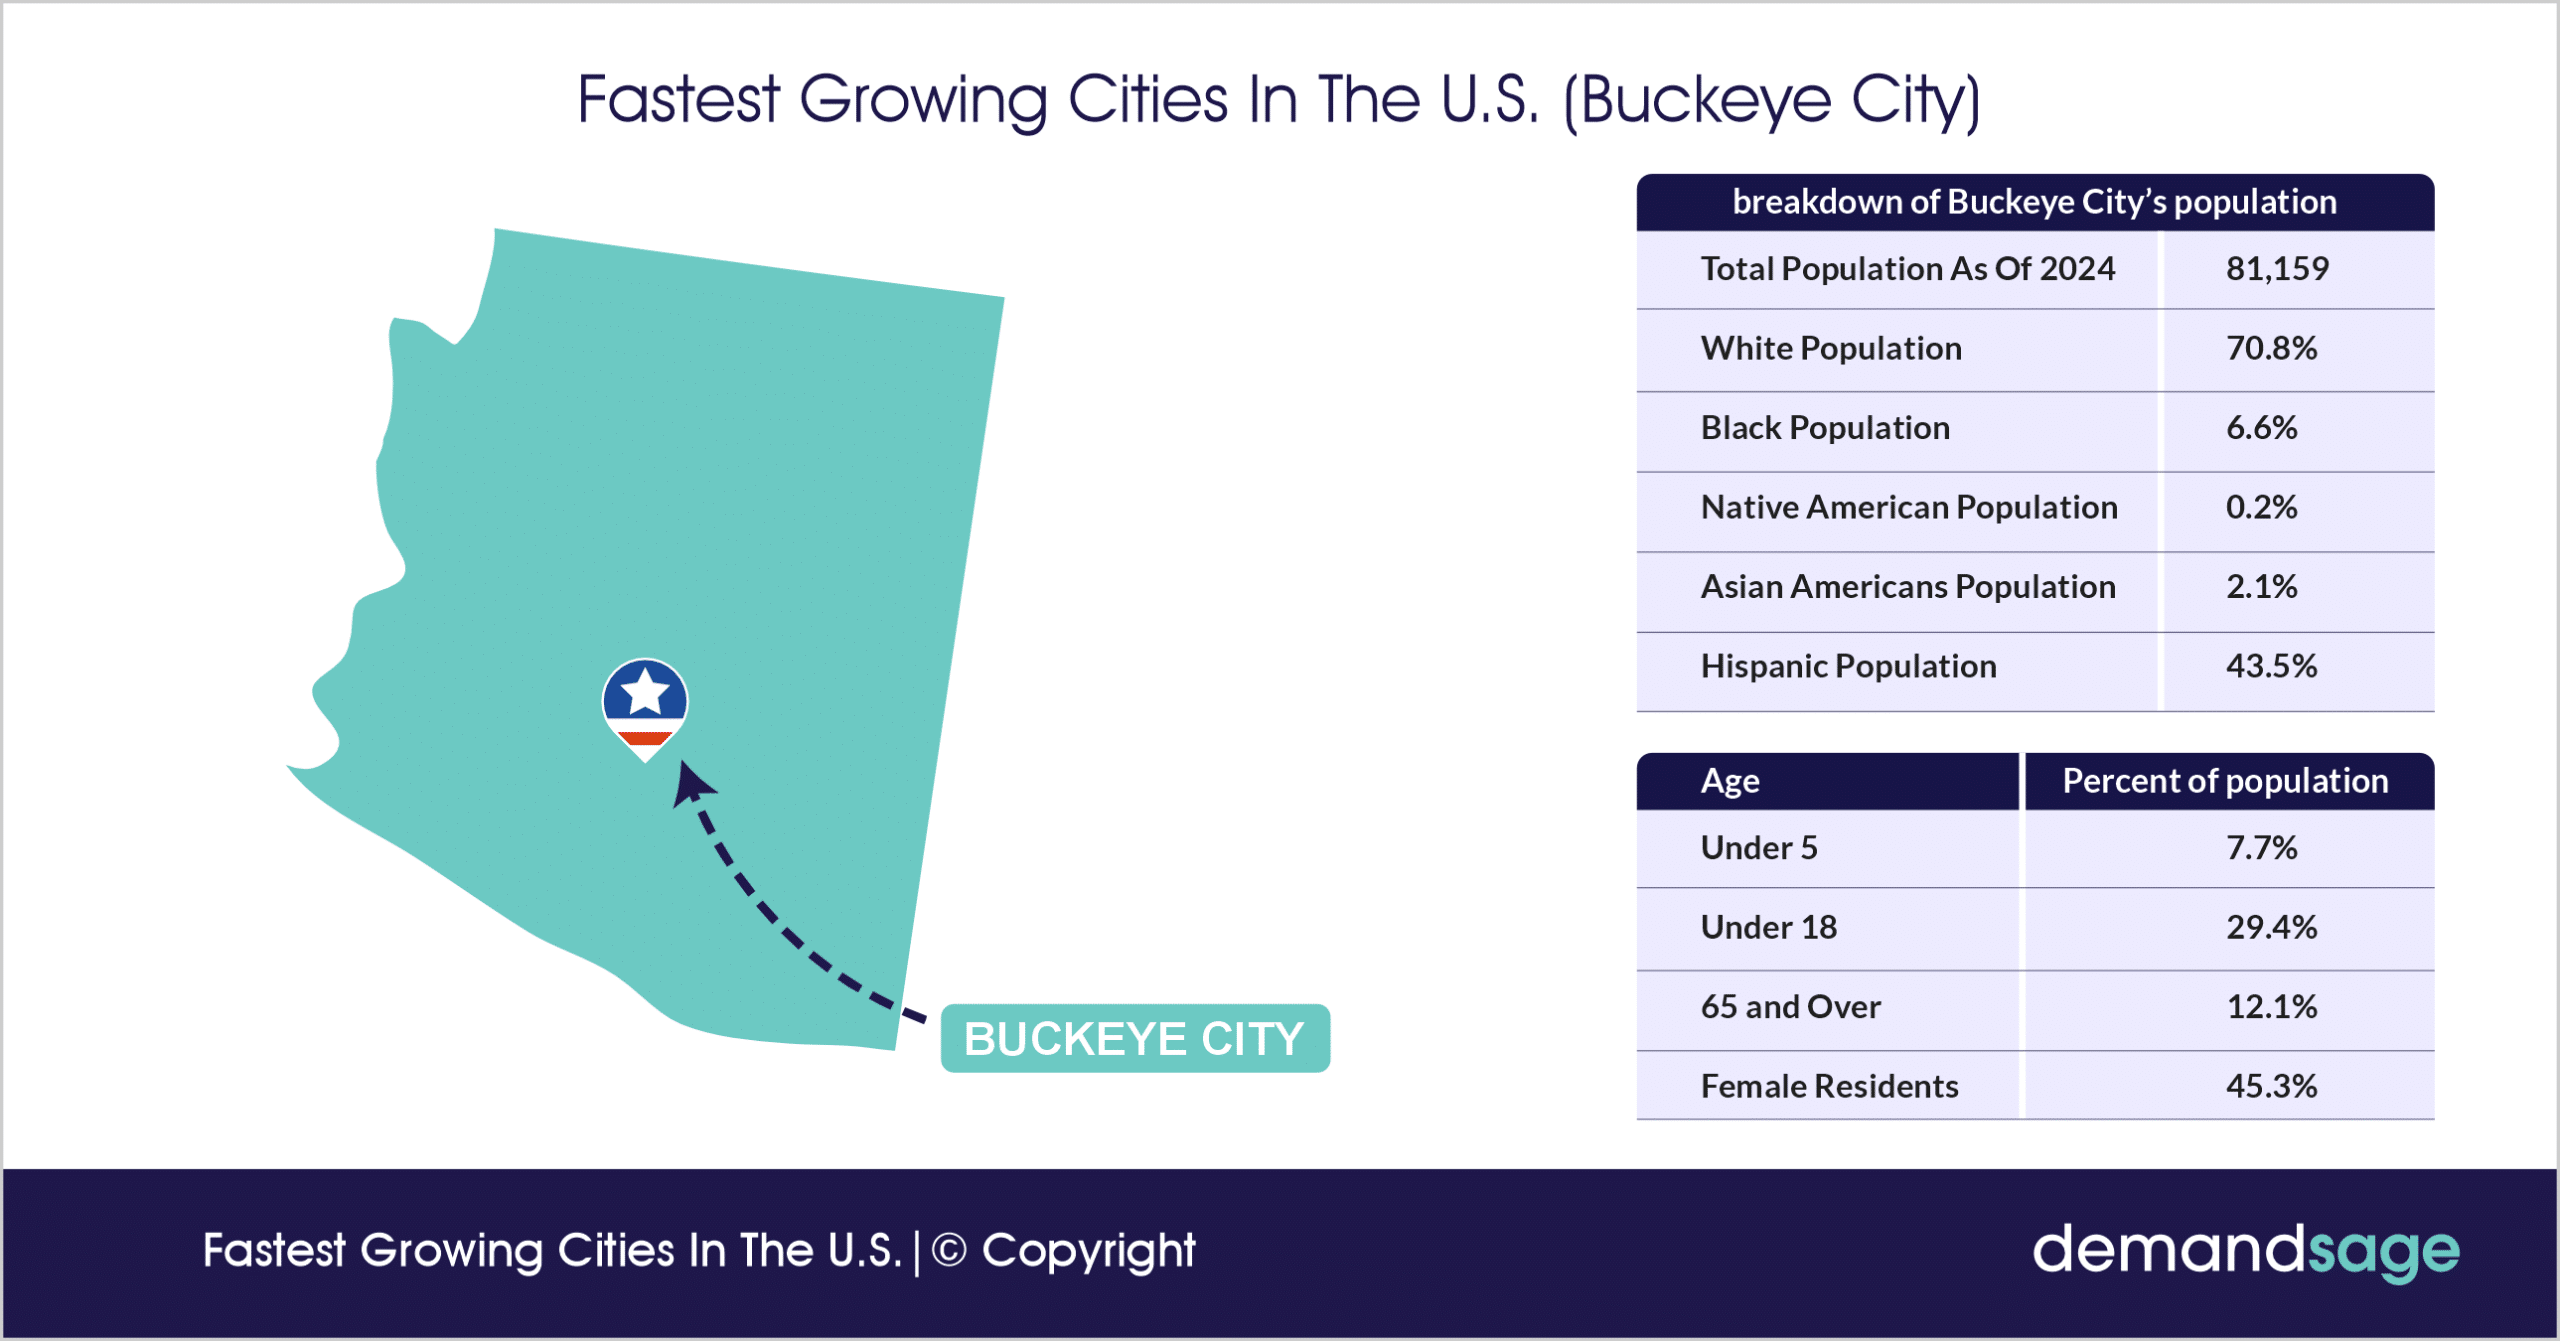 Fastest Growing Cities In The U.S. (Buckeye City)